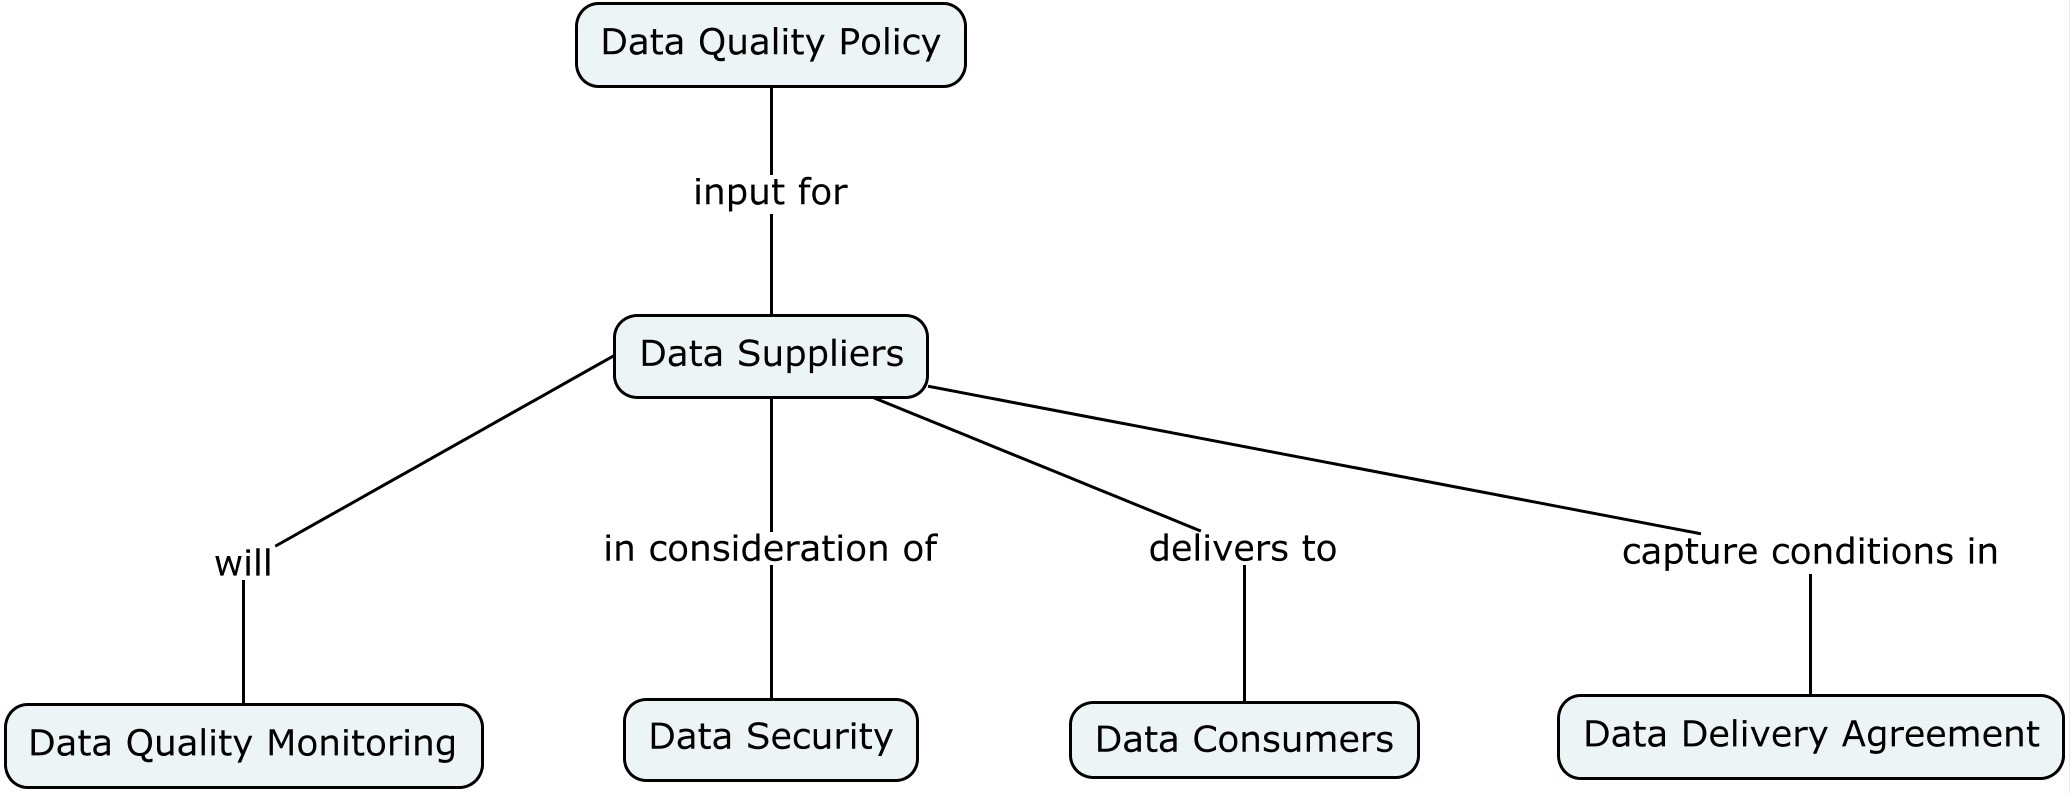 data_suppliers.jpg